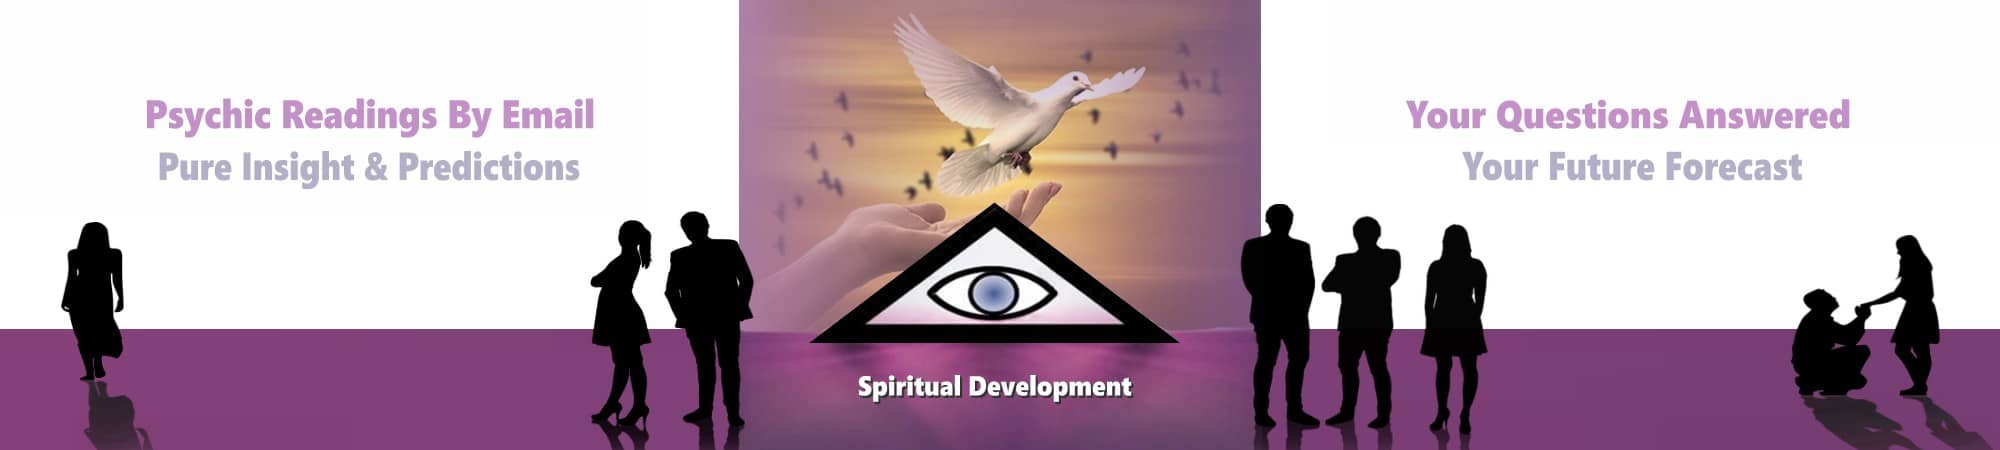 spiritual development page